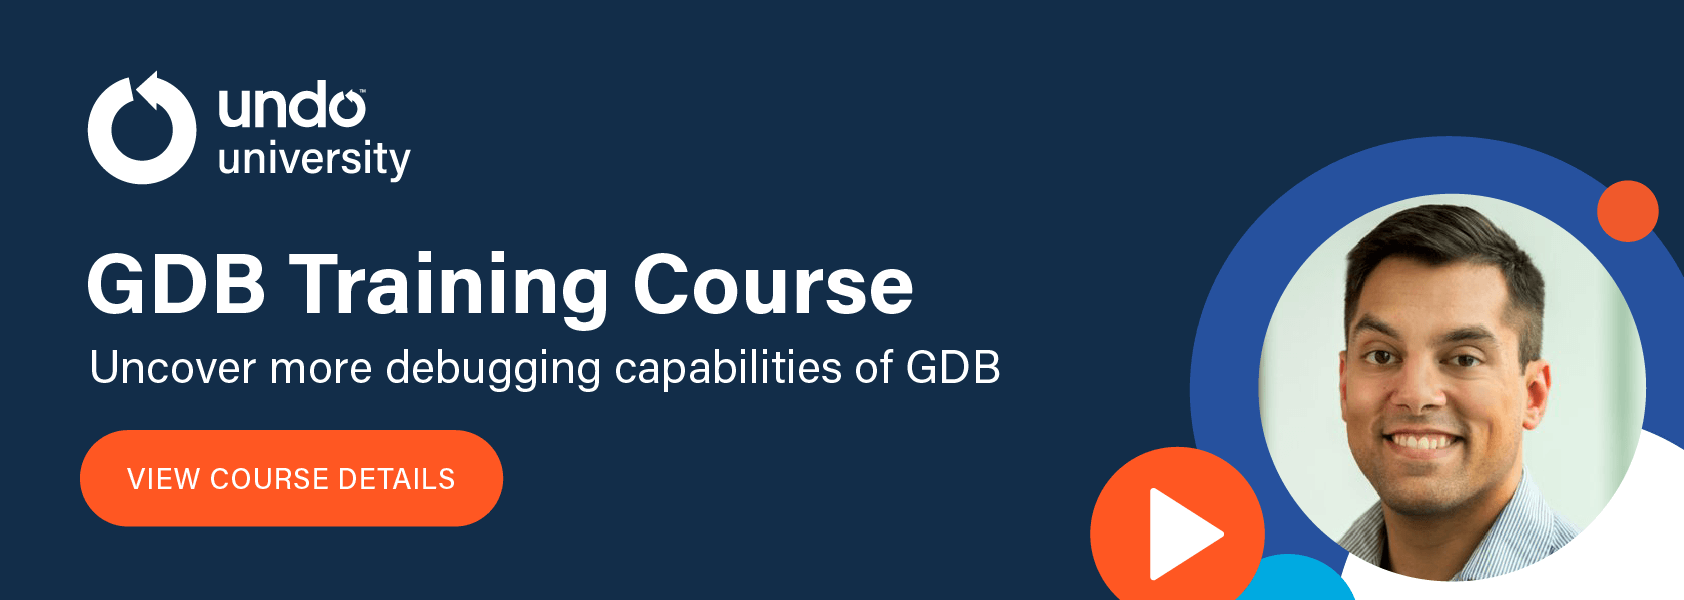 GDB Training Course 